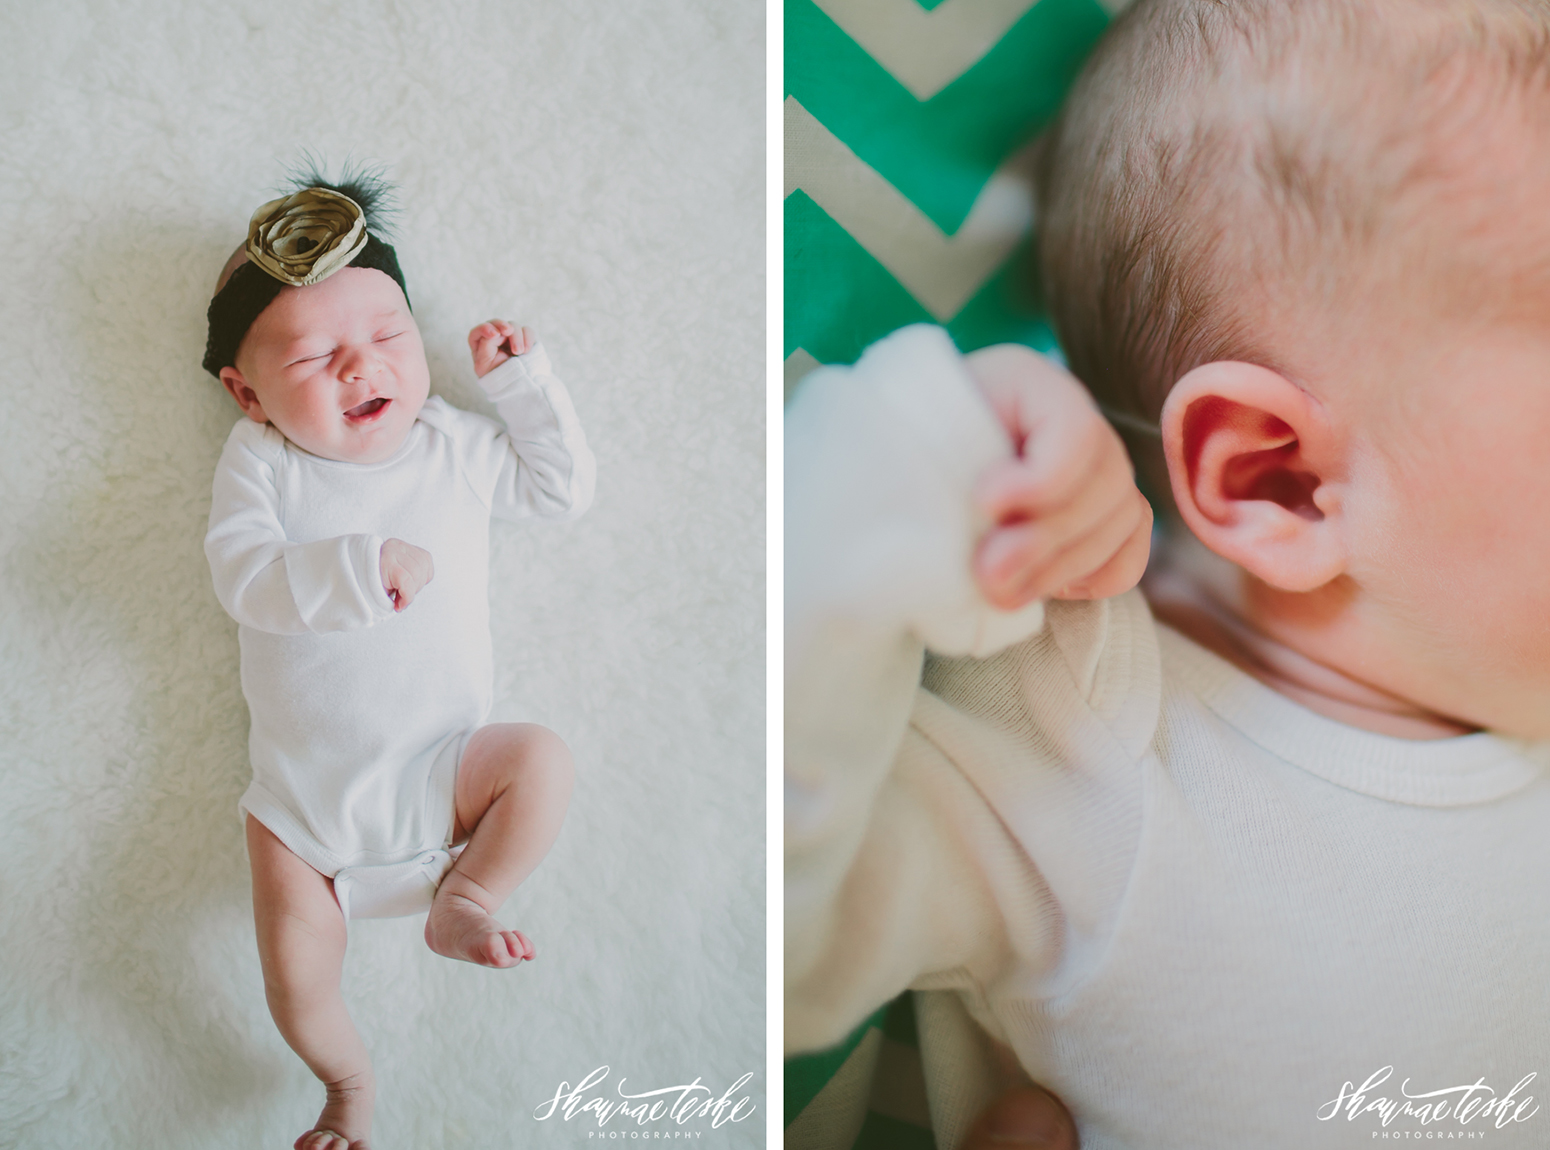 shaunae_teske_wisconsin_photographer_portrait-amelia-newborn-16